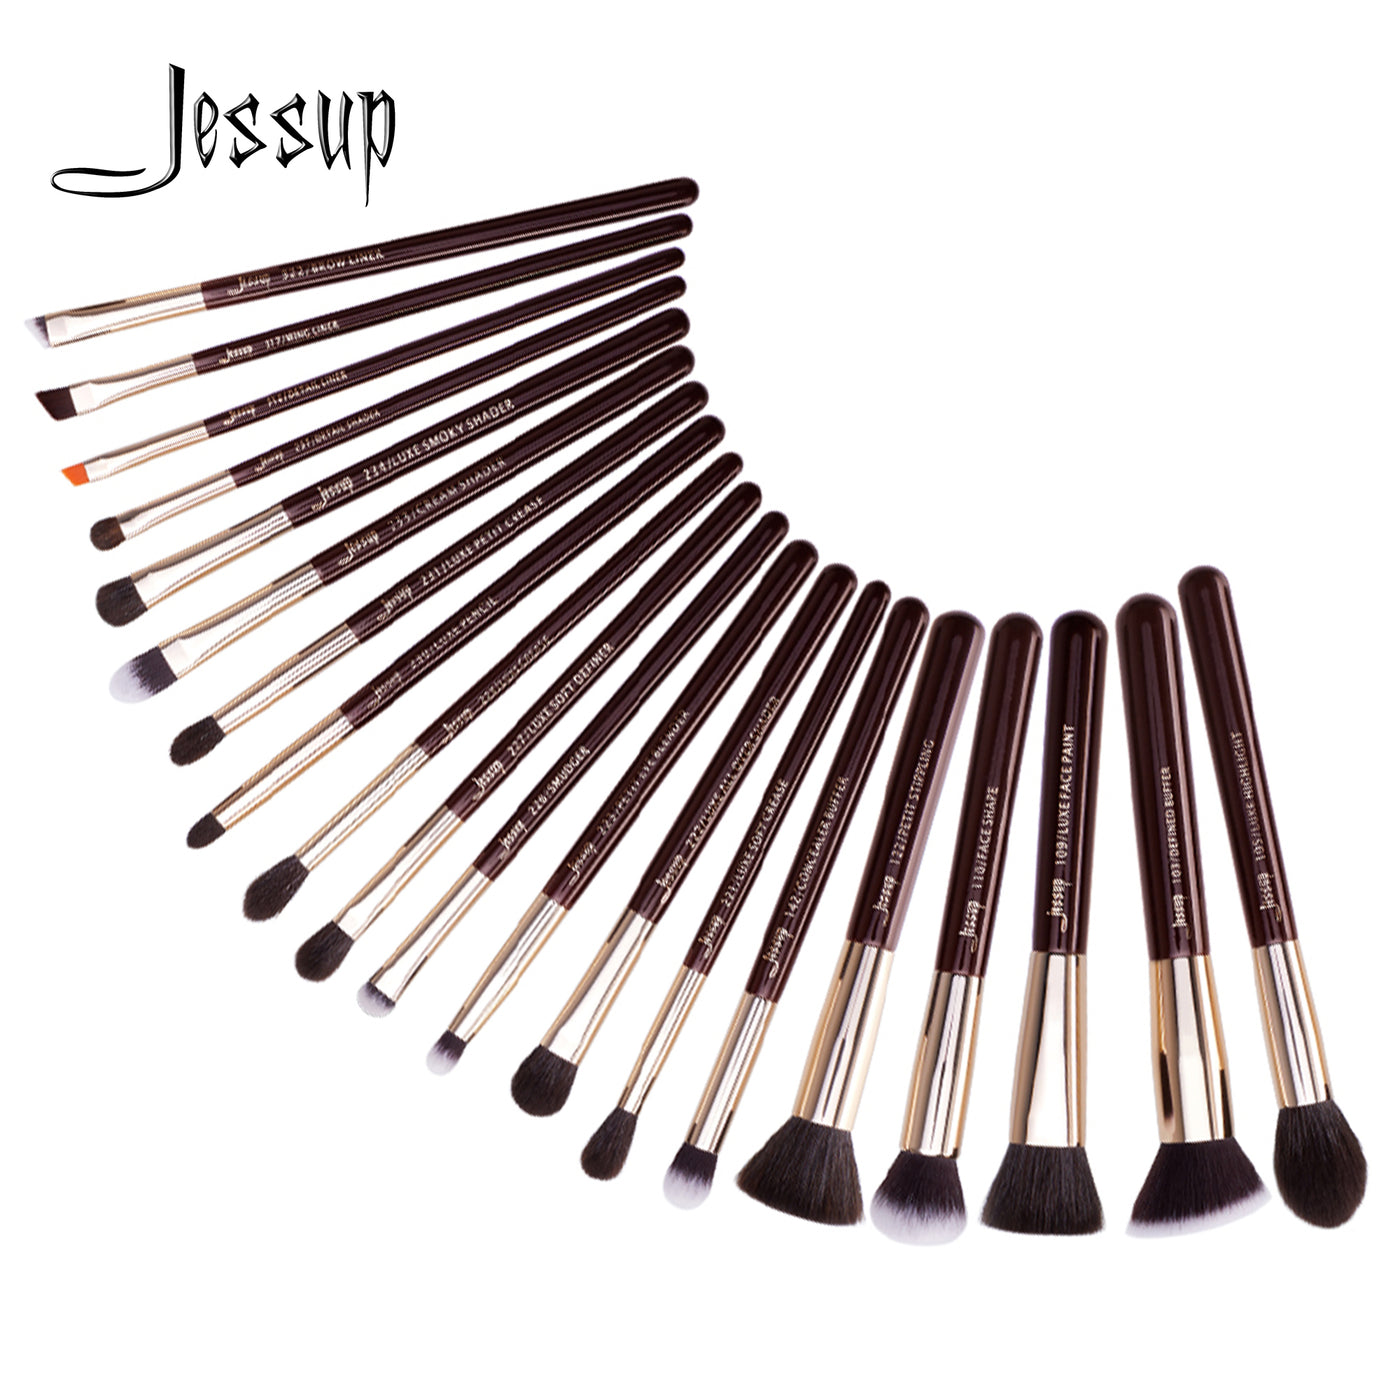 soft makeup brushes set brown 20pcs - Jessup Beauty UK